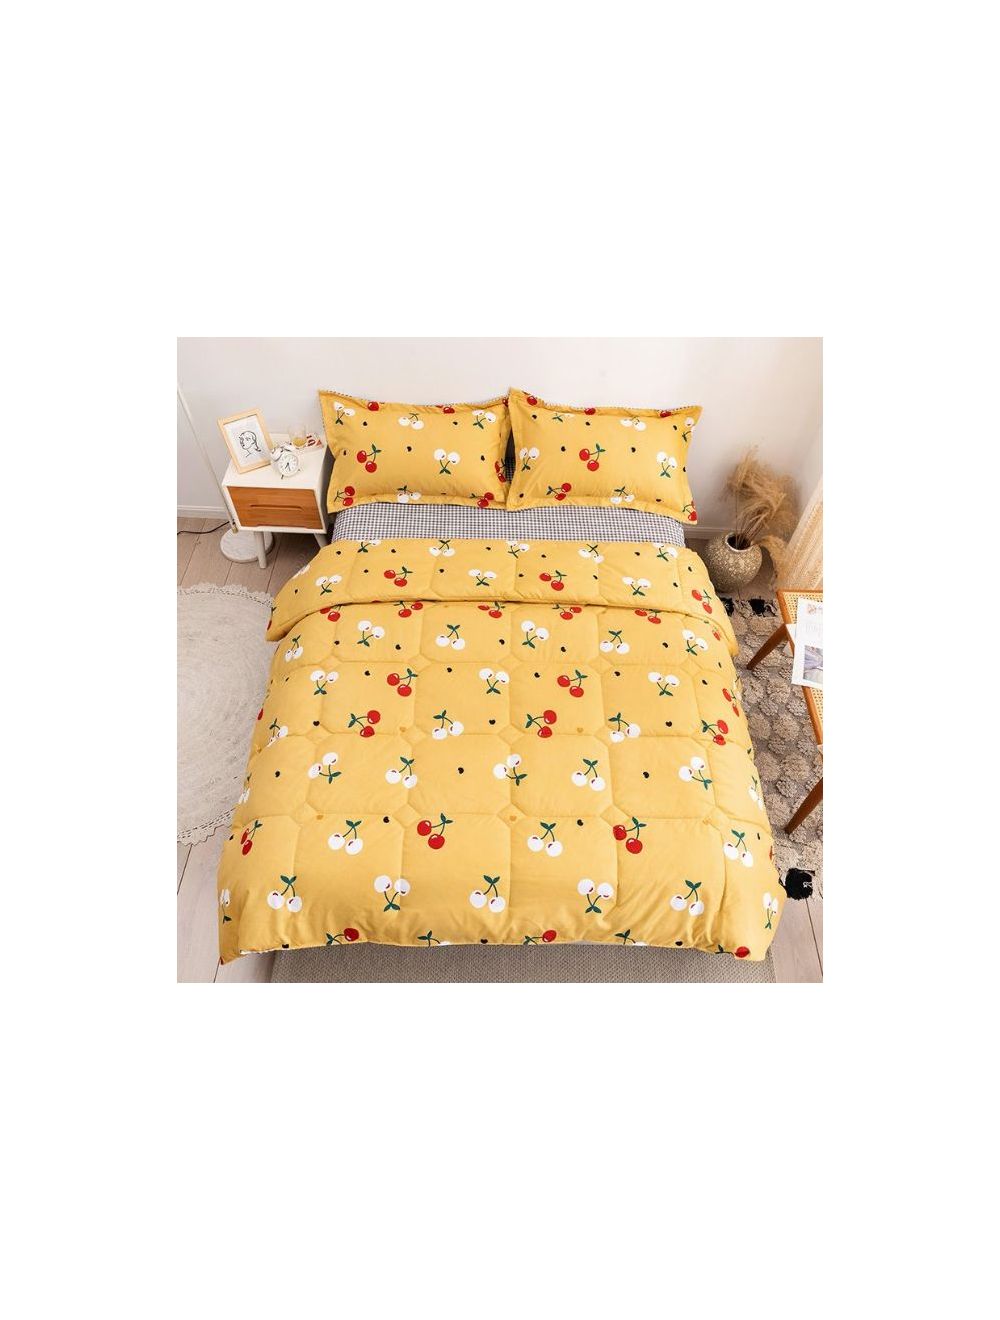 Rishahome 4 Piece Queen Size Comforter Set Microfiber Yellow 210x230cm-FYECS0004